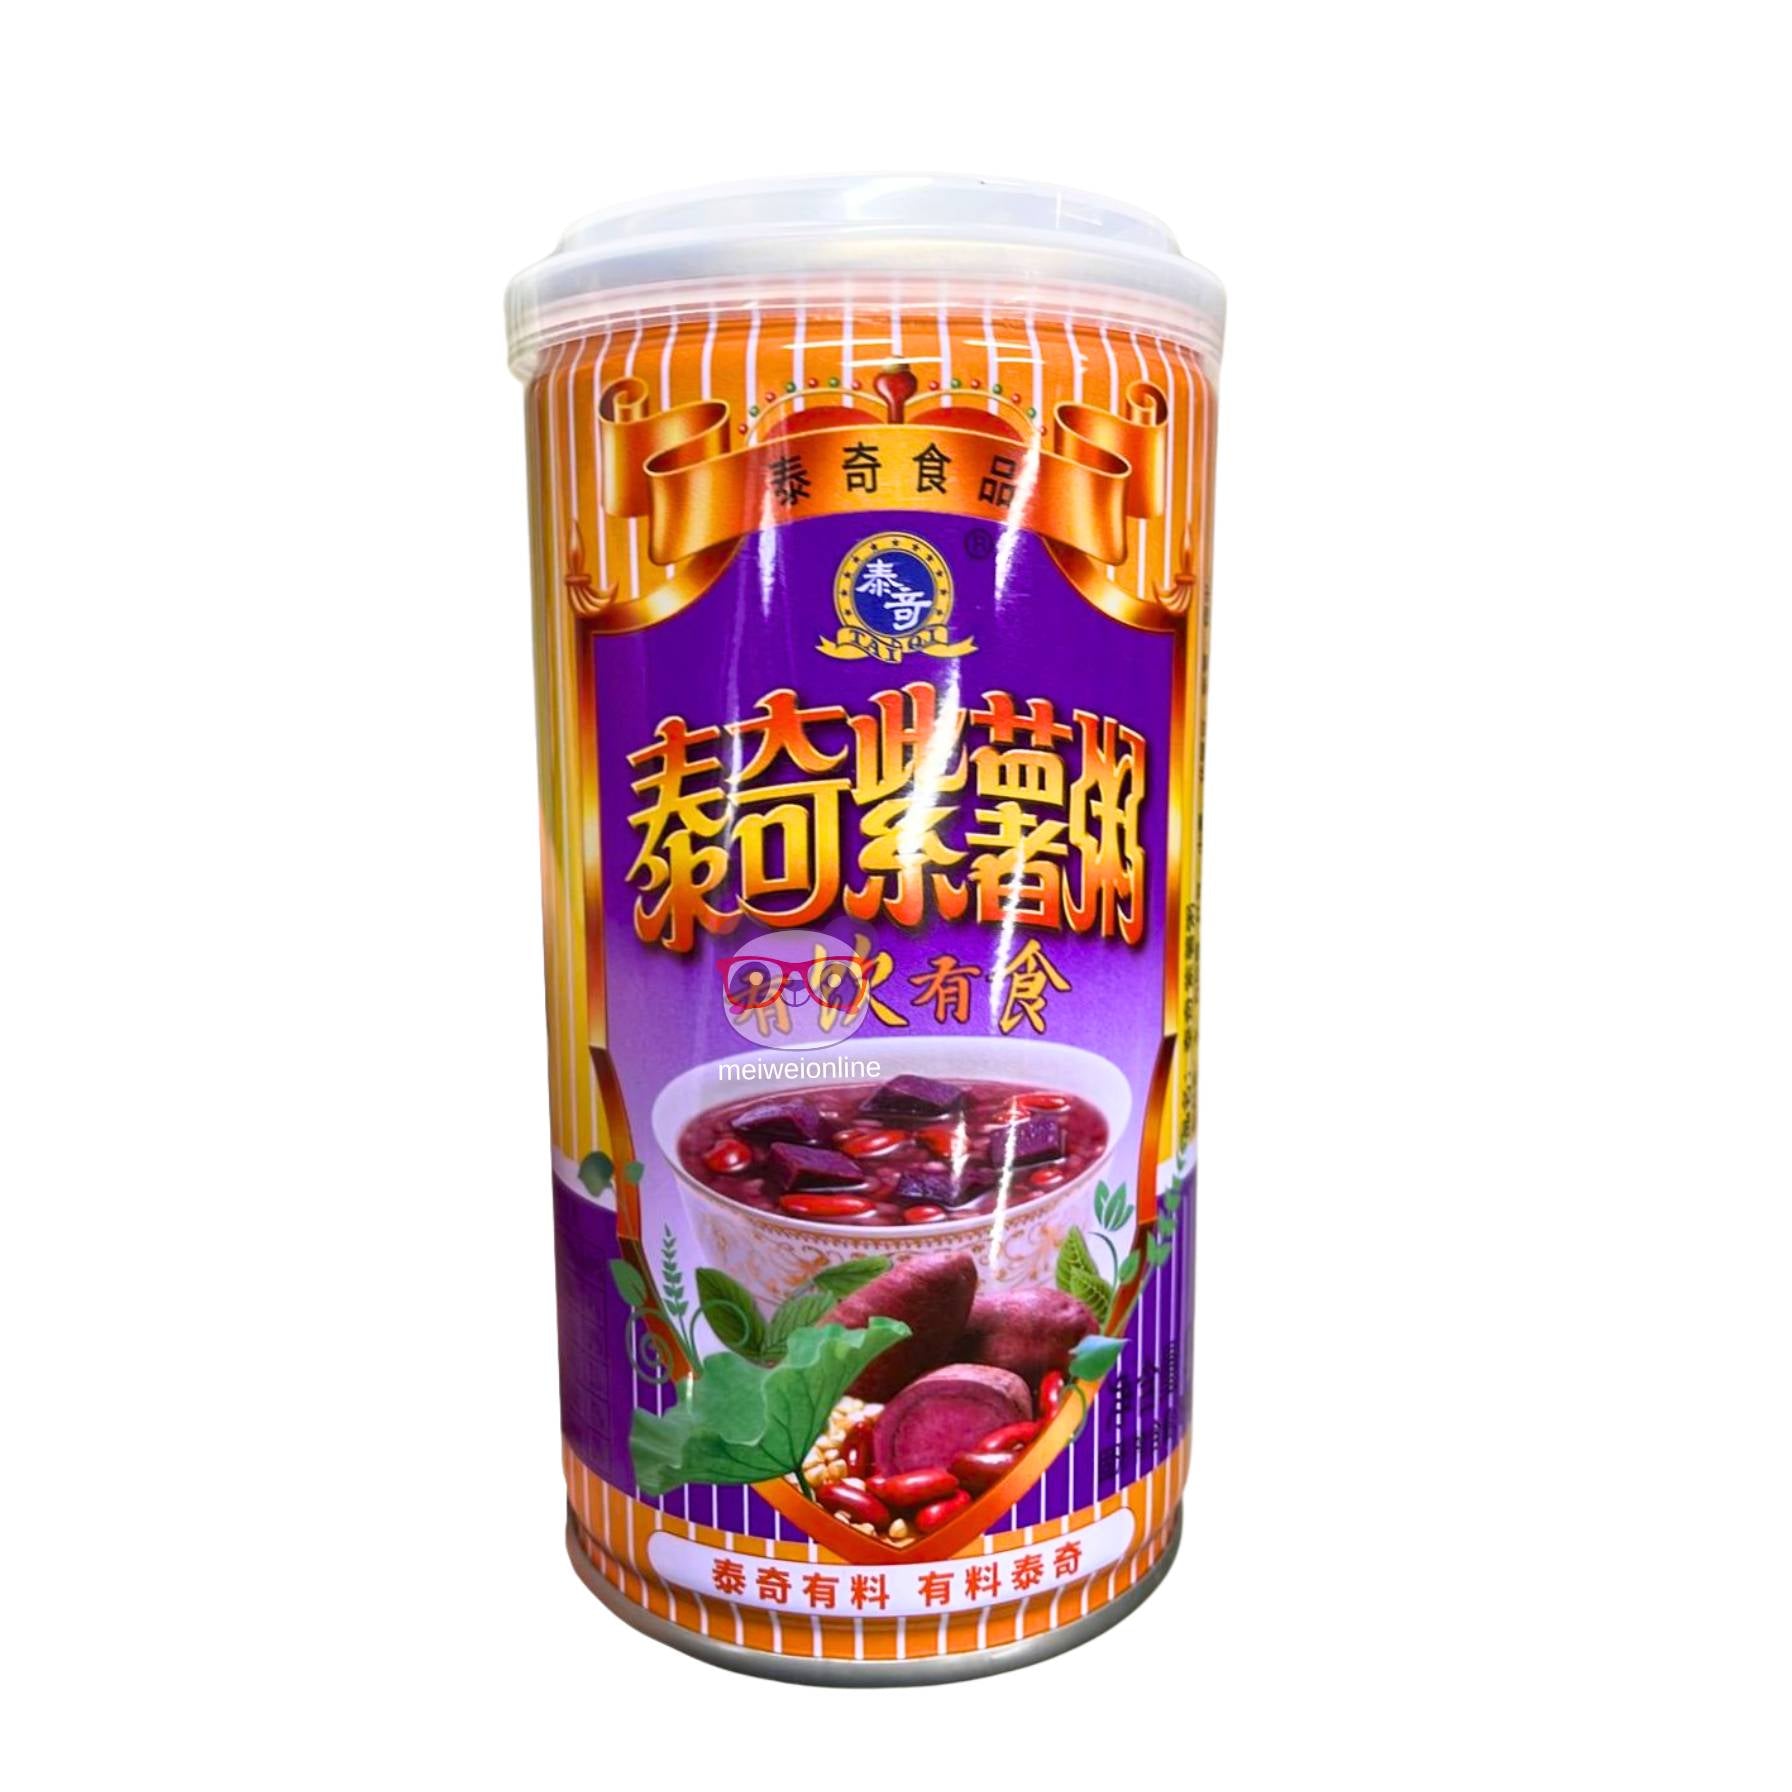 Mingau de batata doce roxa - Taiqi 370g